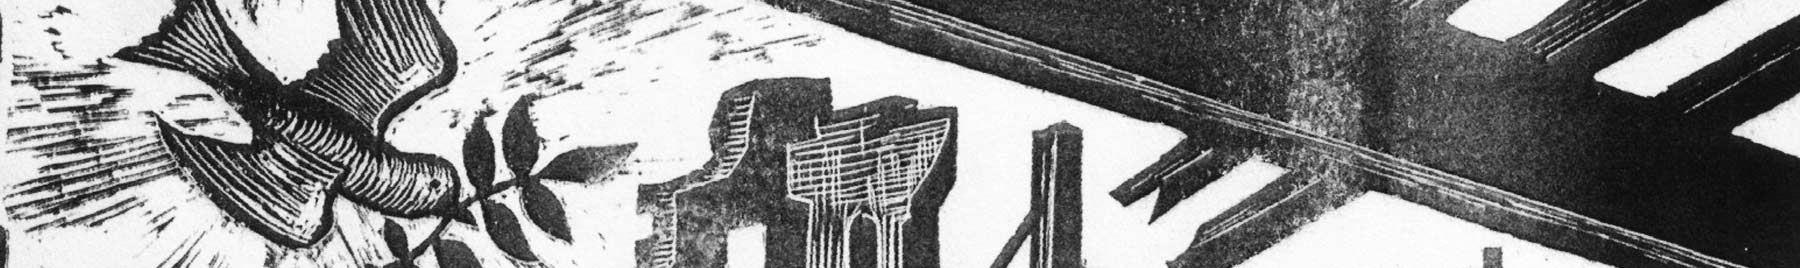 Detail from Fritz Richter (1904-1981), Und über uns der Himmel, woodcut via Wikimedia Commons